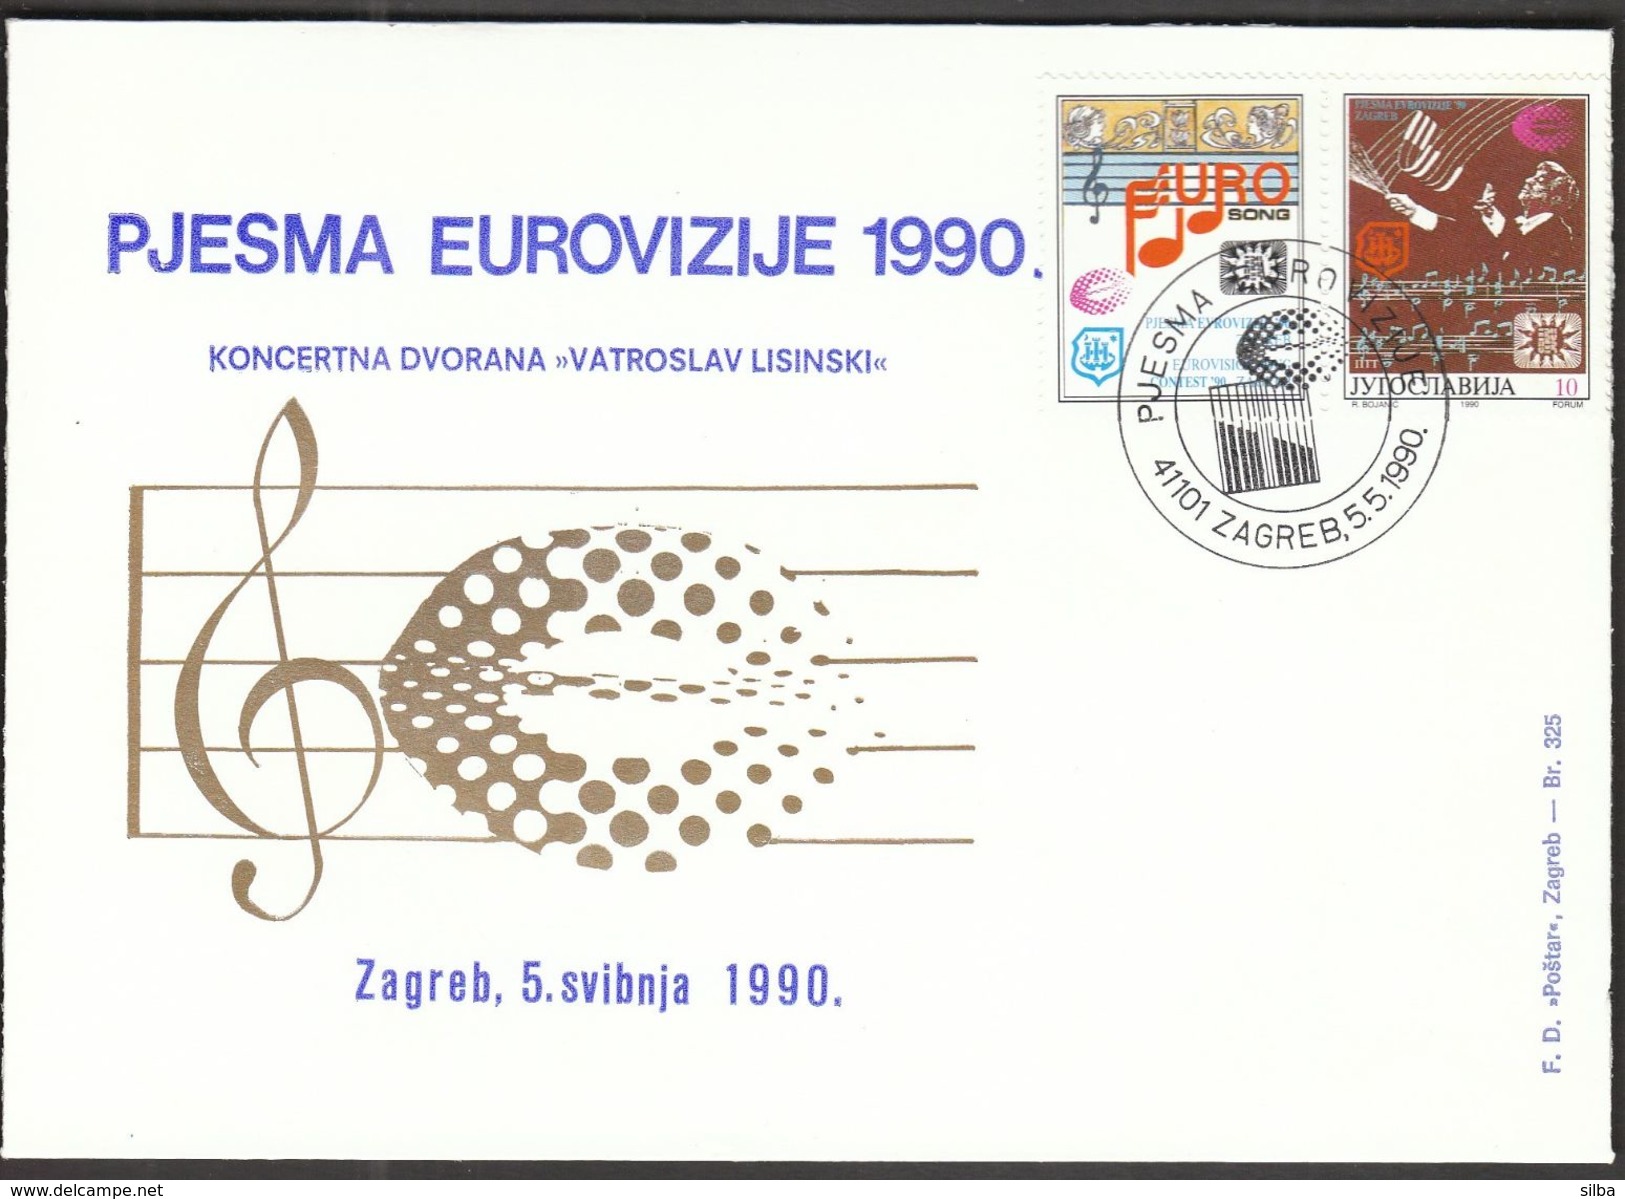 Yugoslavia Croatia Zagreb 1990 / Music / Eurovision Song / Concert Hall Vatroslav Lisinski - Music